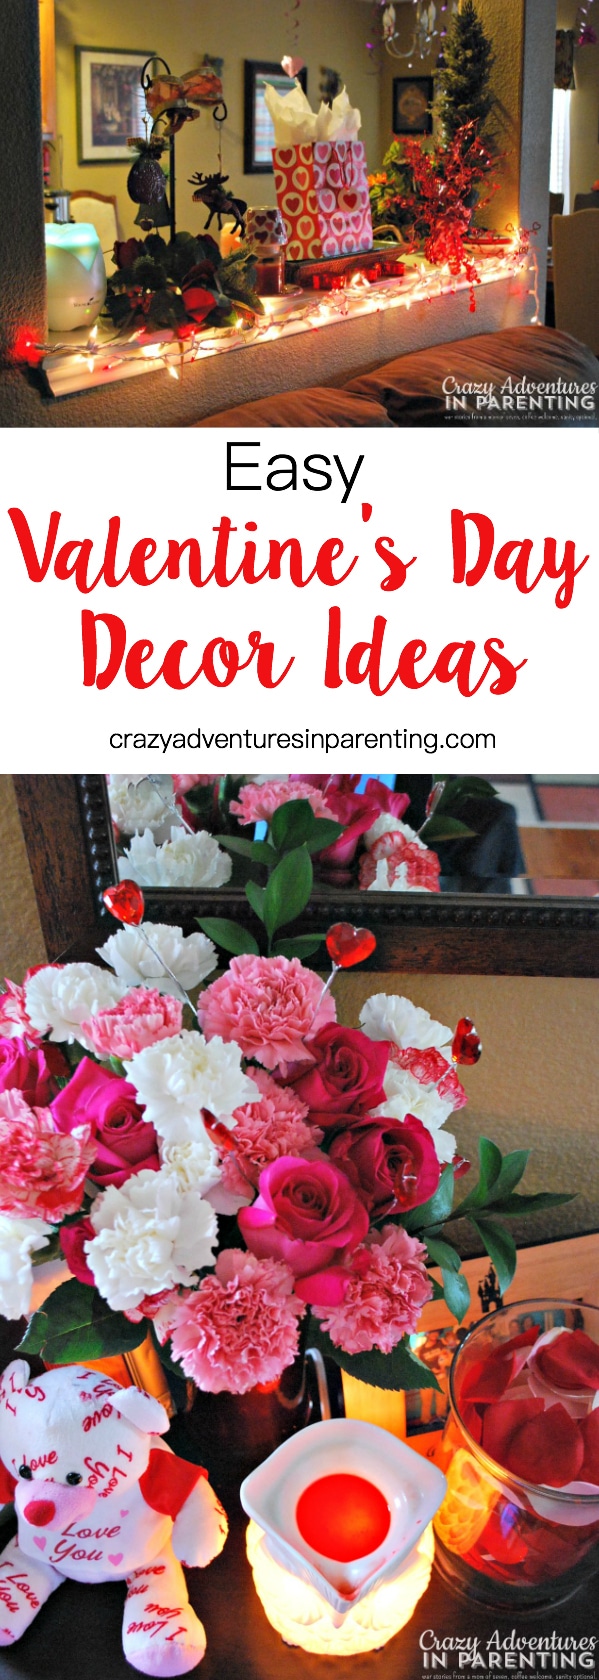 Easy Valentine's Decorating Ideas